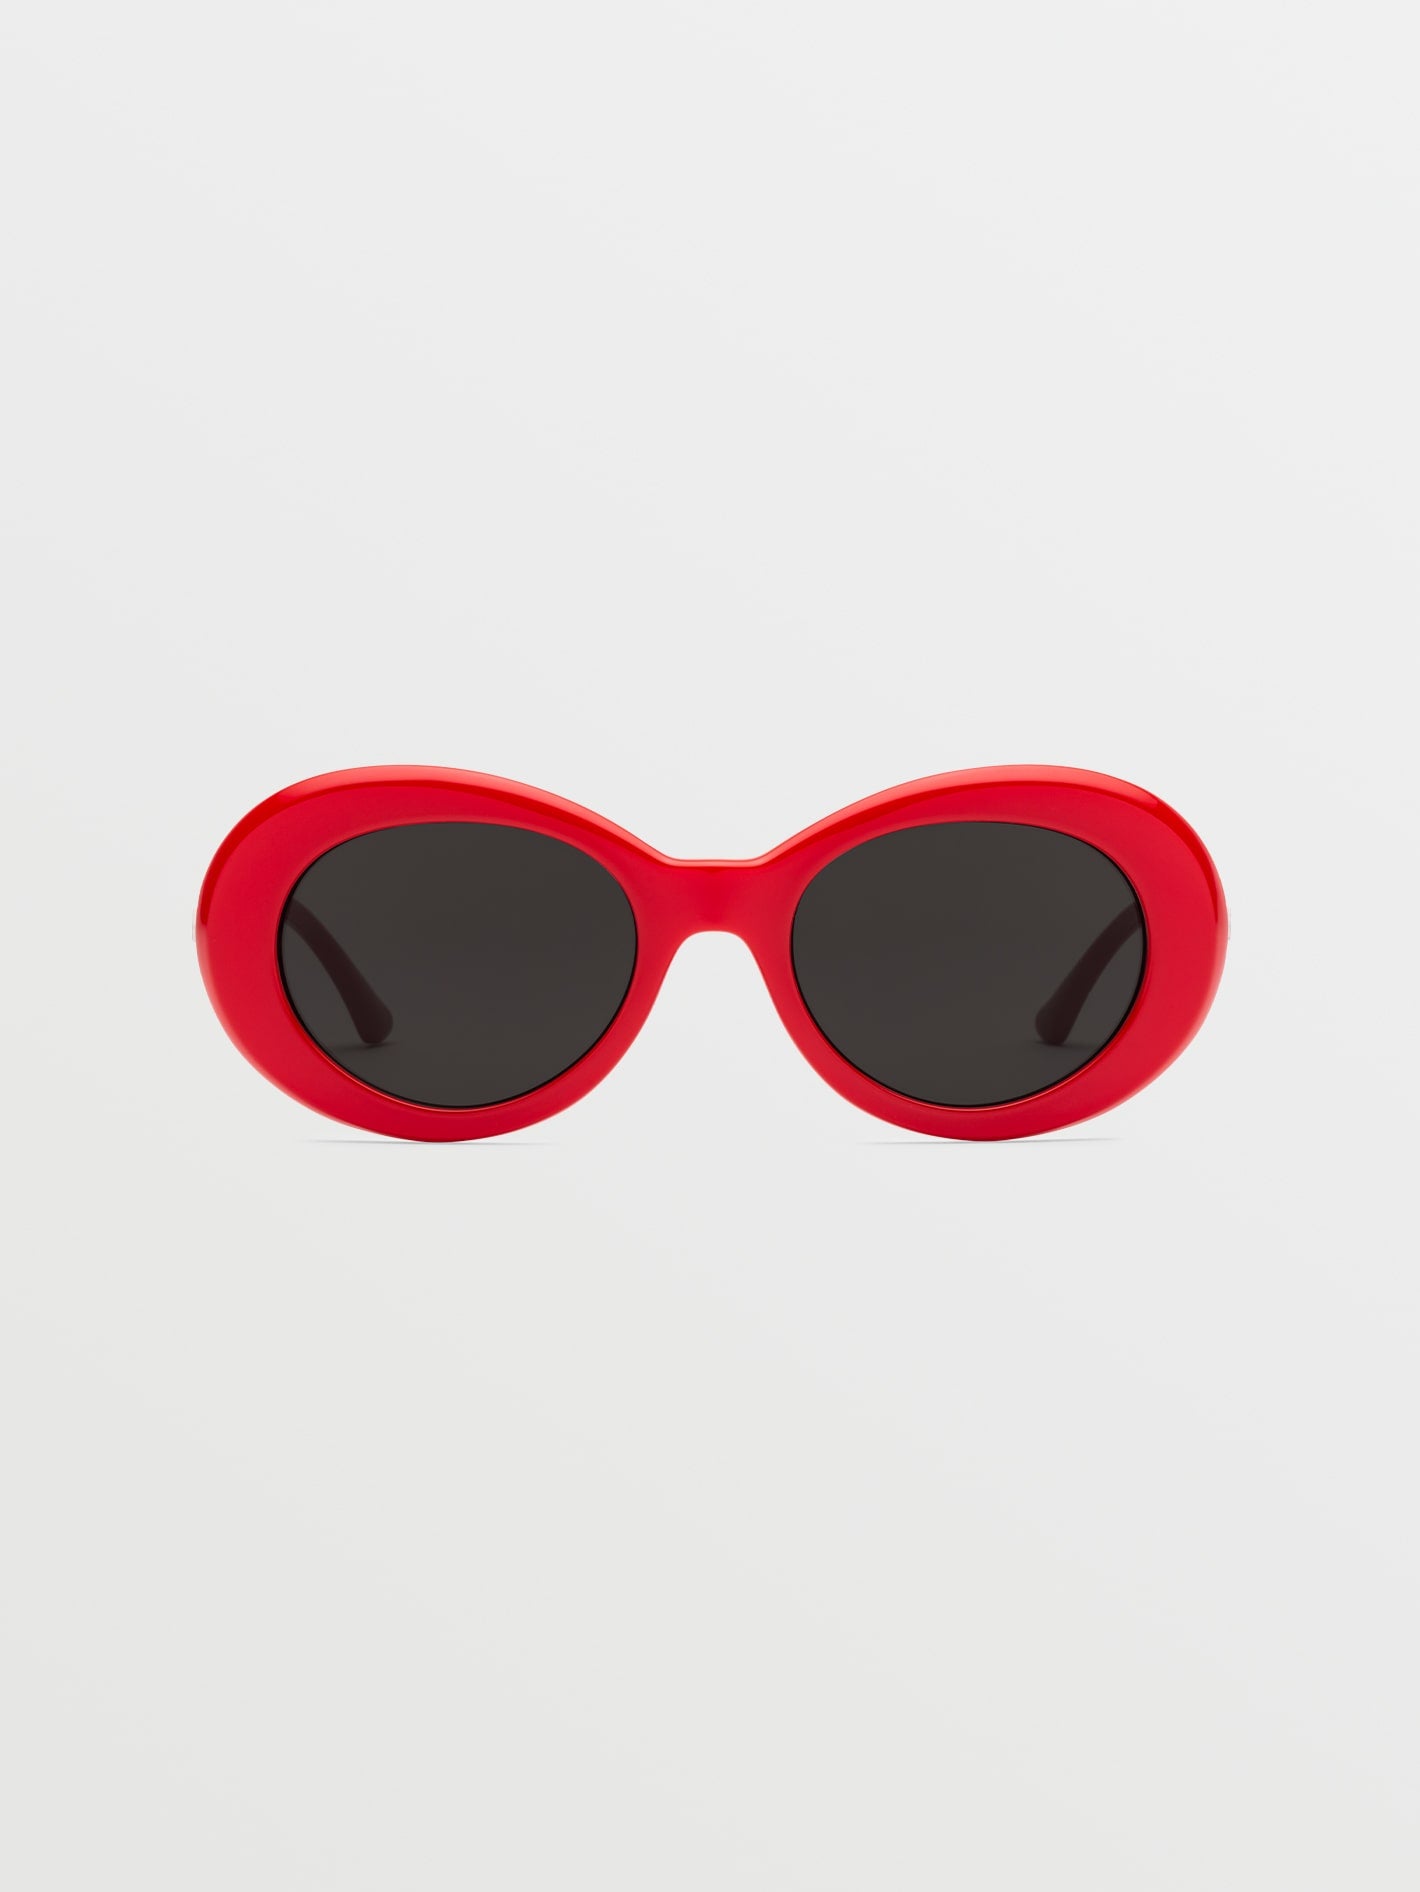 Stoned Sunglasses - Gloss Red/Gray